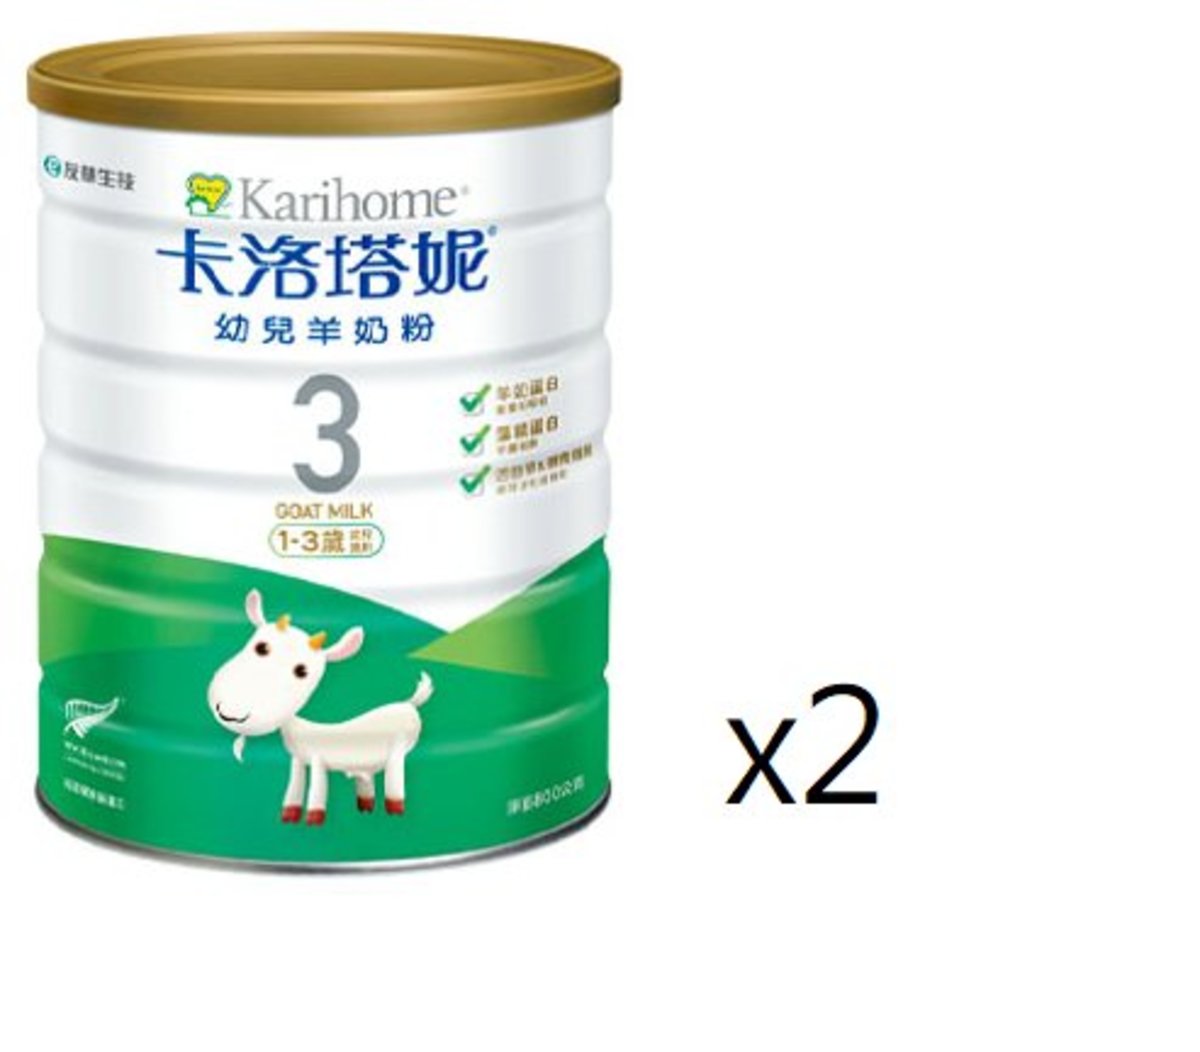 KARIHOME Karihome Growing Up Goat Milk 800g x 2 [Parallel Import]